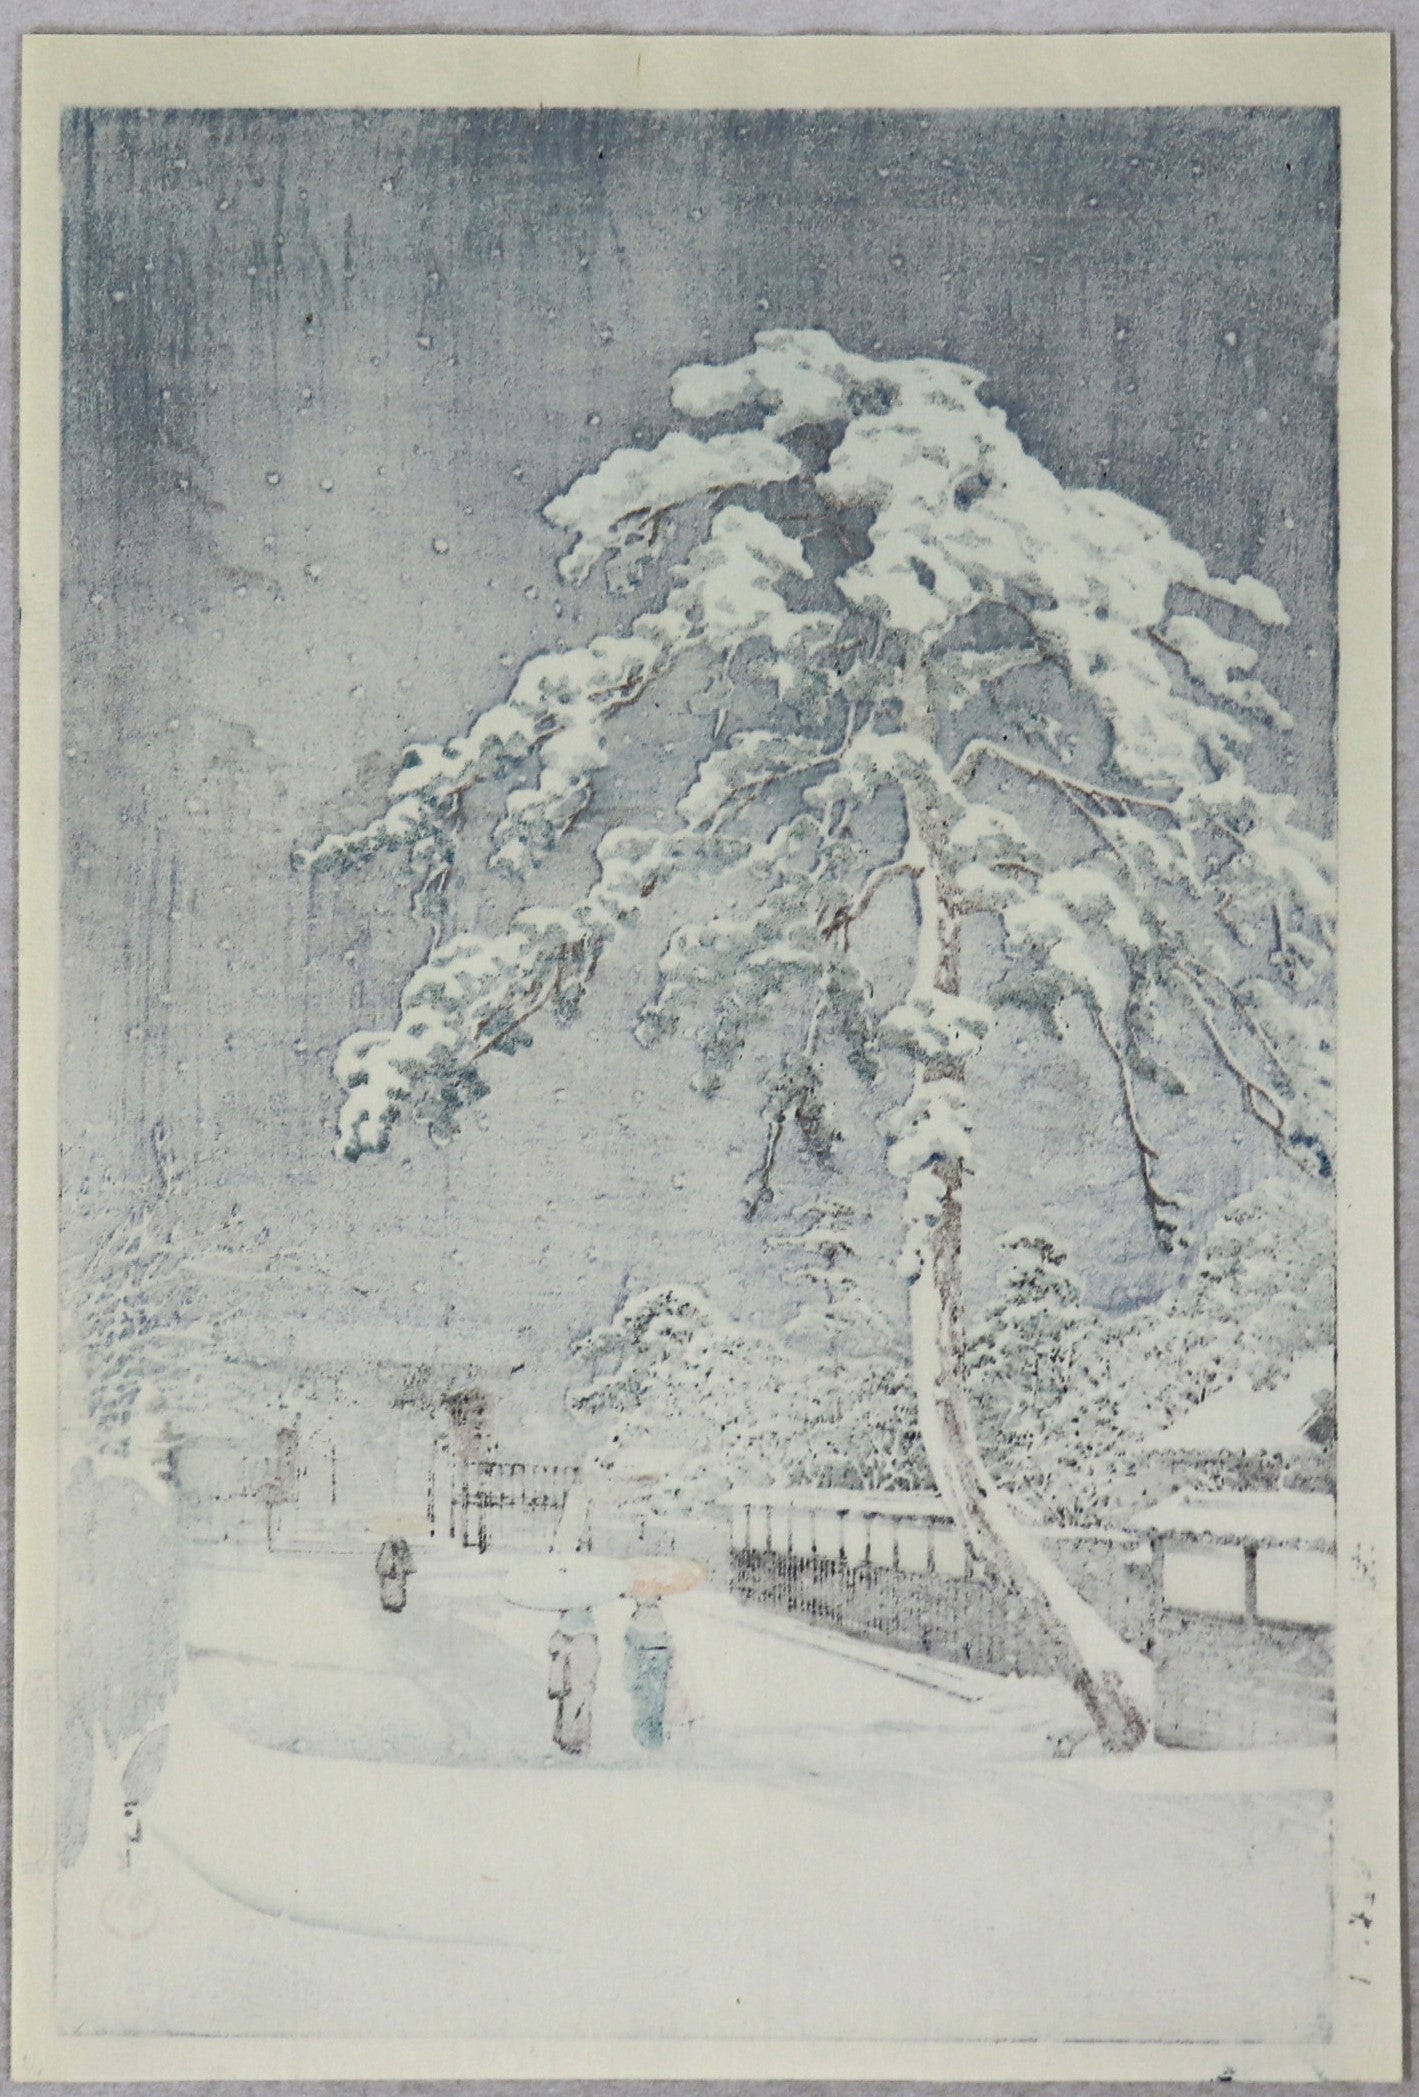 Snowy day at Honmon-ji Temple in Ikegami by Kawase Hasui / Jour neigeux au temple Honmon-ji dans le quartier d'Ikegami